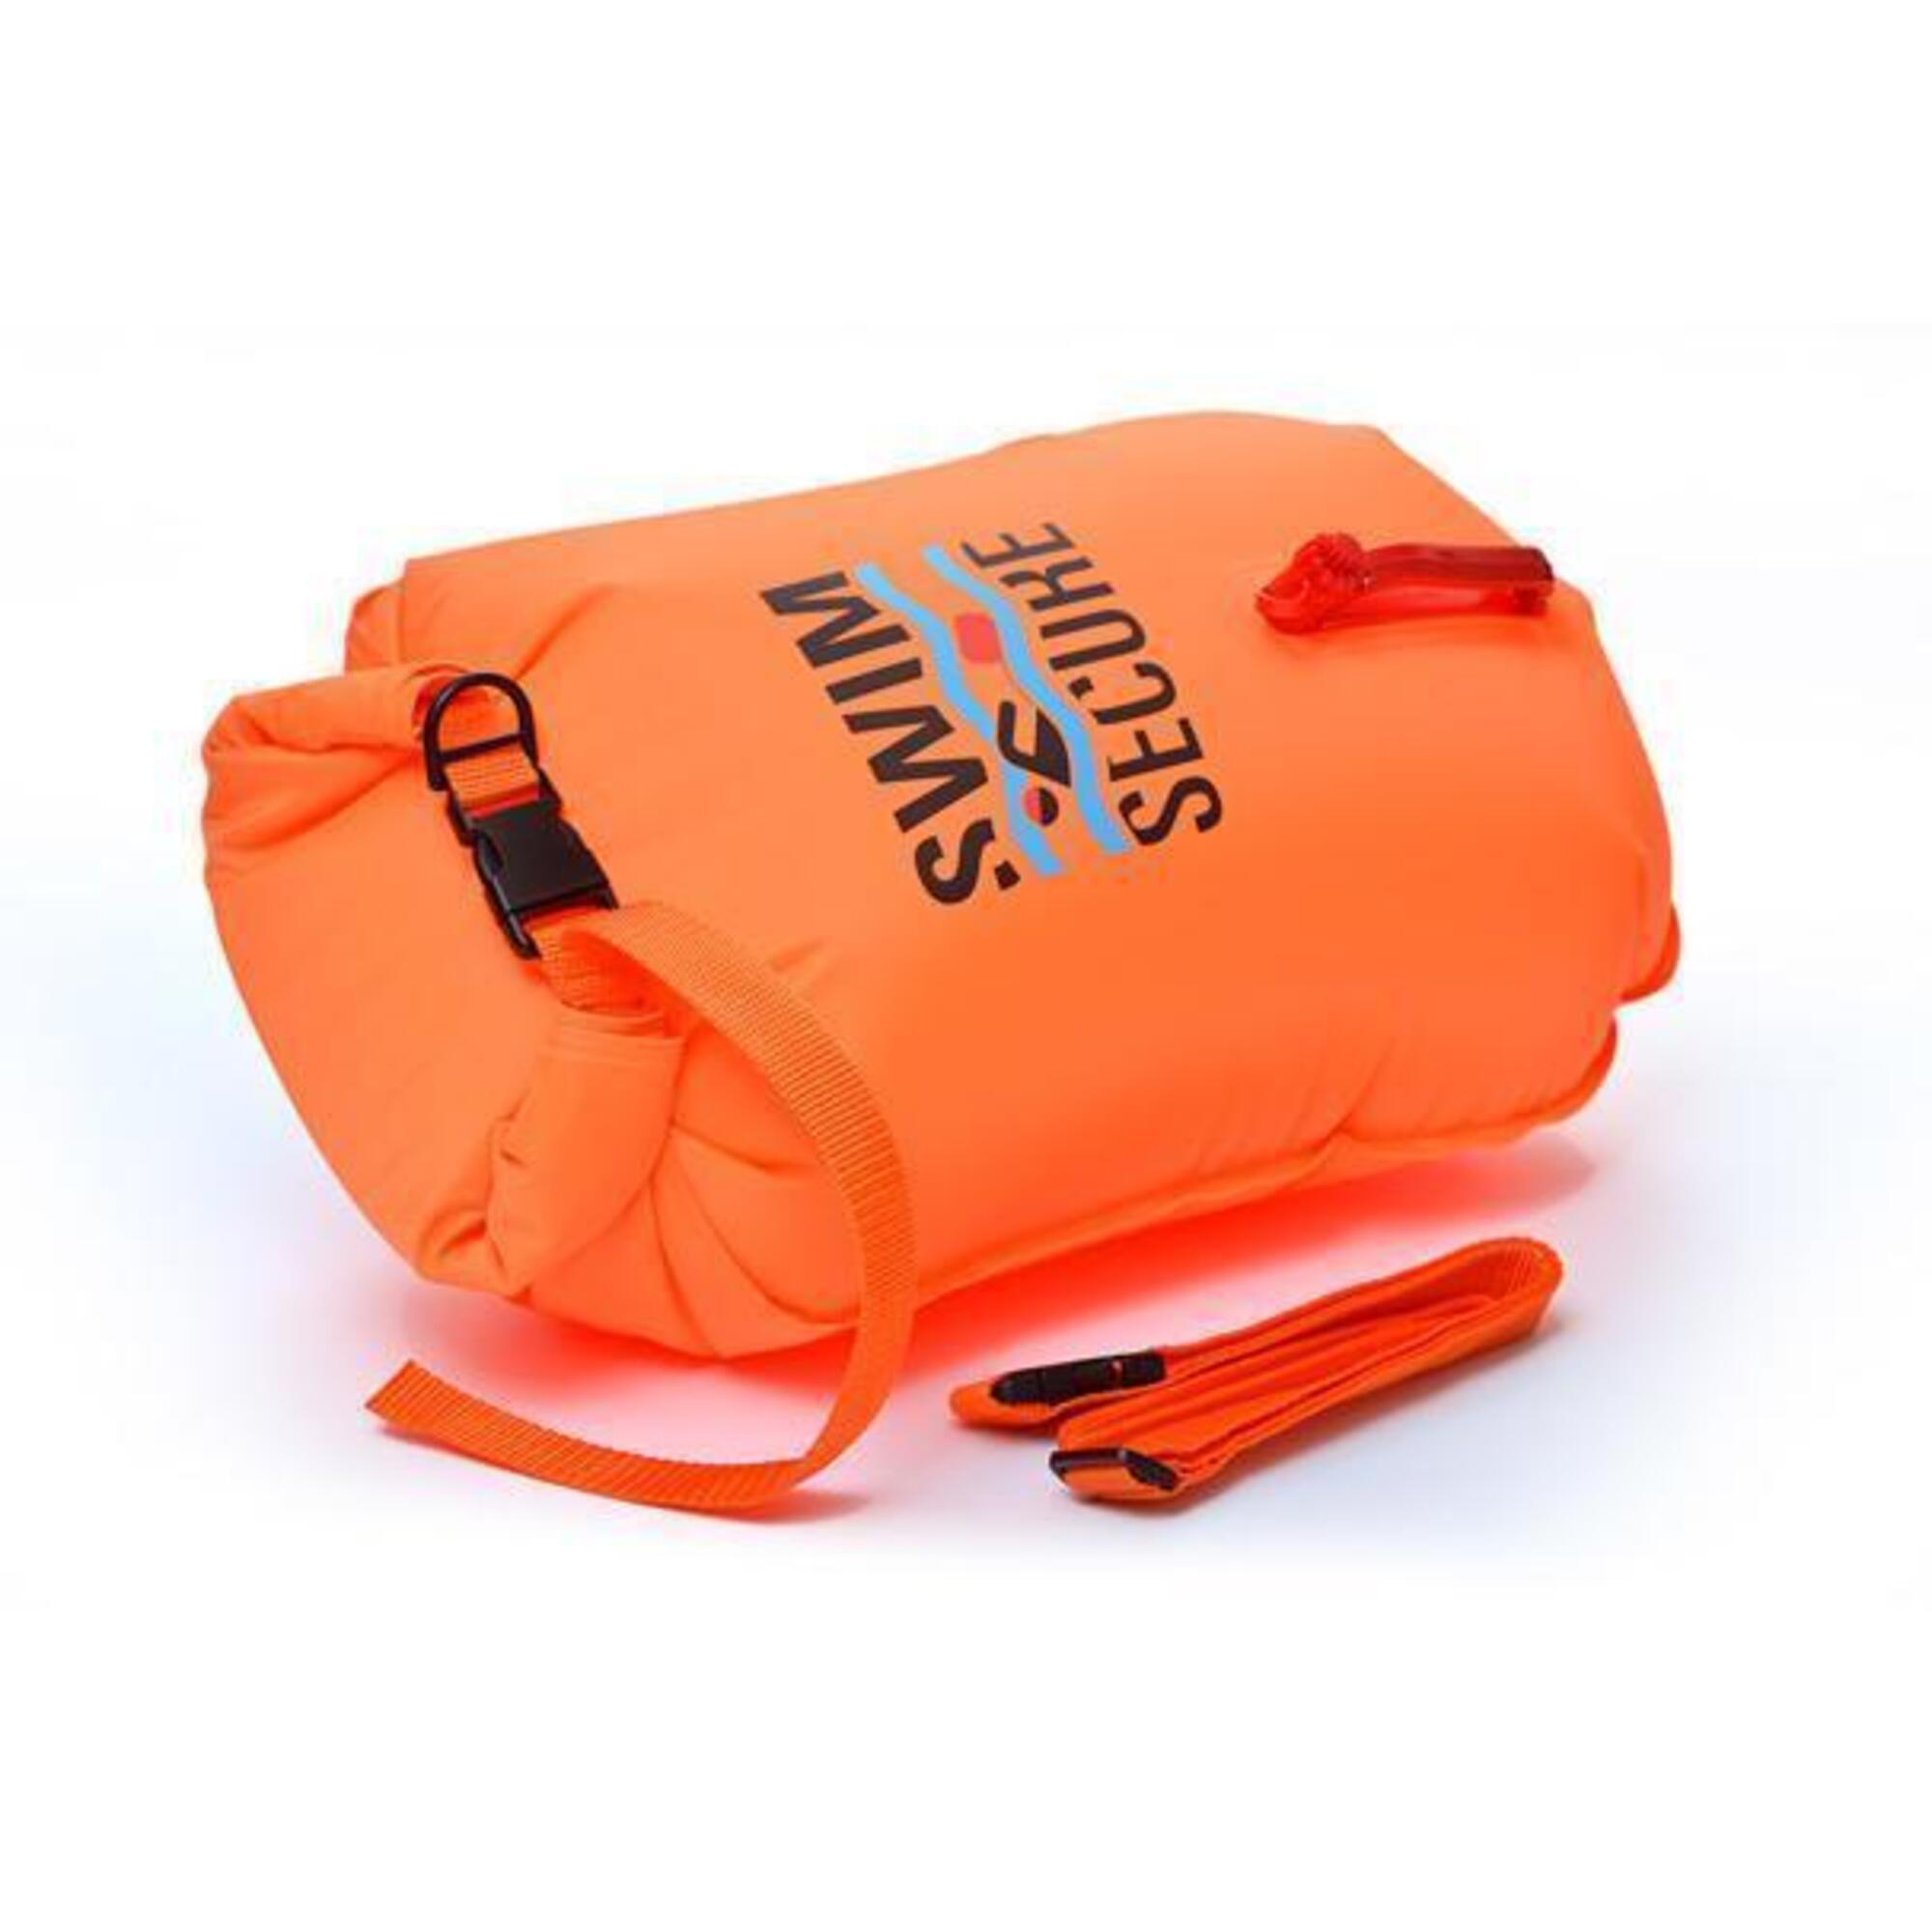 20L Dry Bag Orange SWIM SECURE | Decathlon